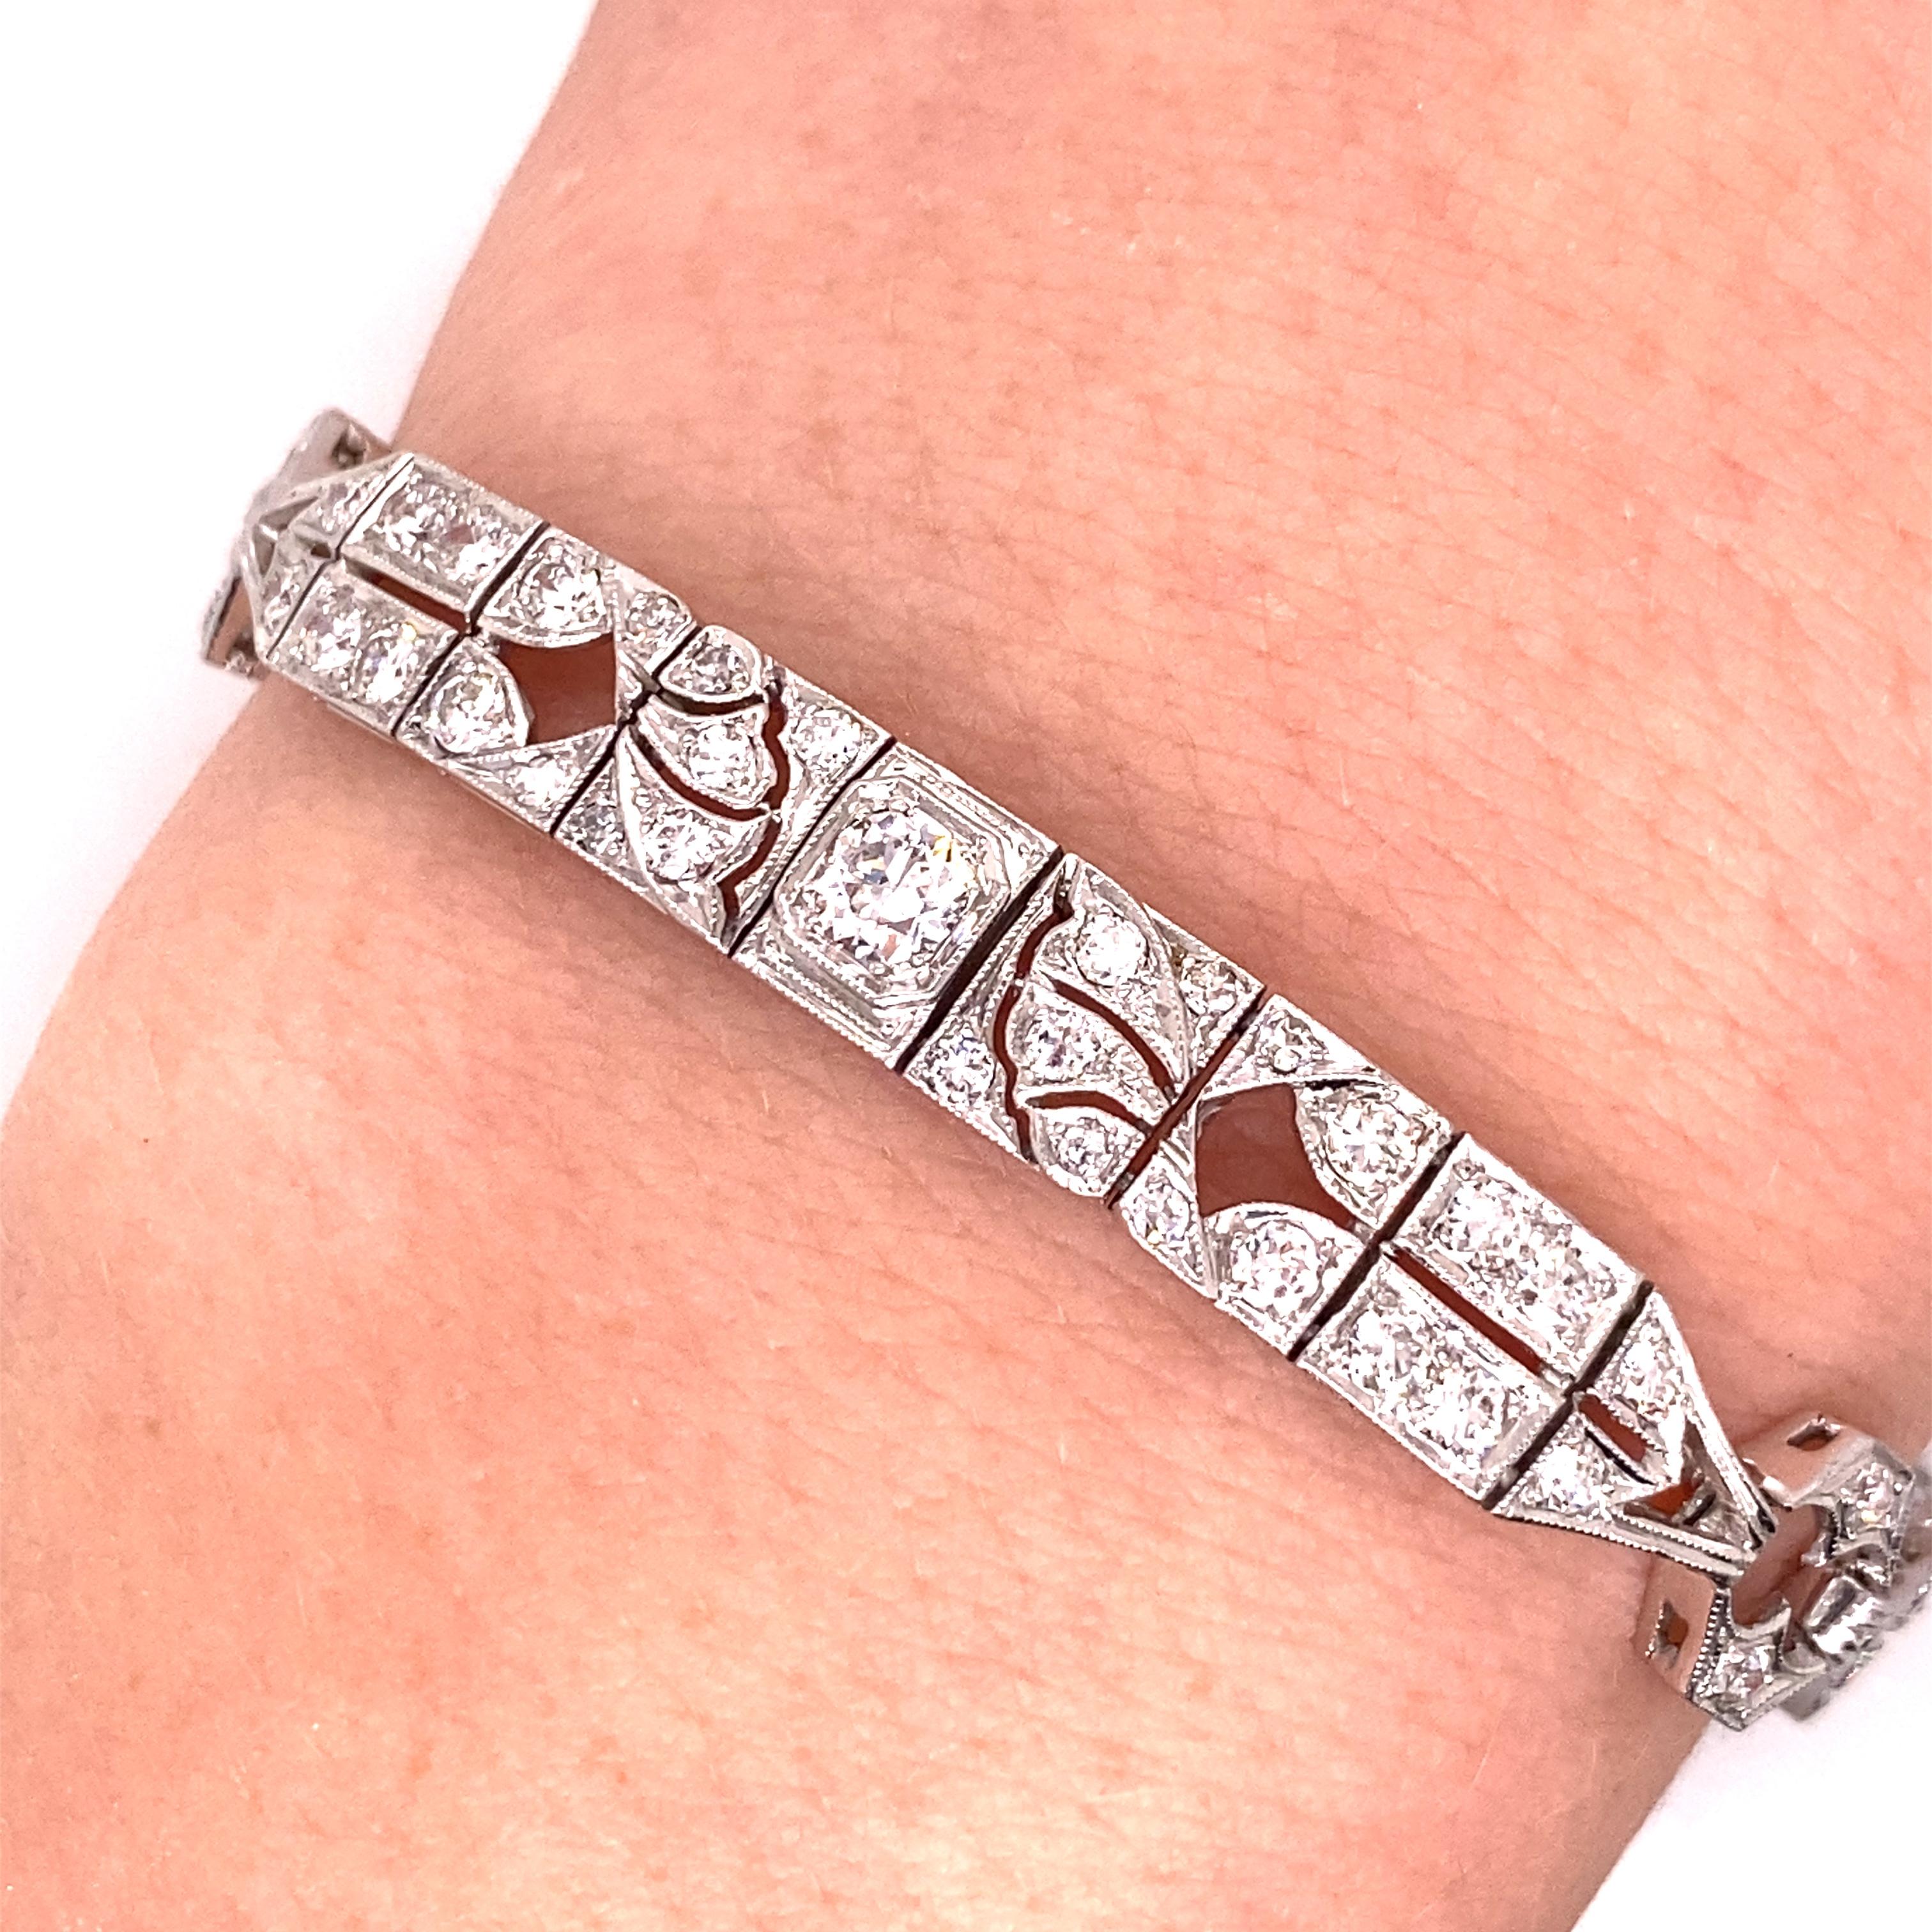 Vintage 1930's Art Deco Platinum Diamond Bracelet 3.00ct - The bracelet contains 3 European cut diamonds that weigh about .70ct total and an additional 126 smaller European and single cut diamonds that weigh about 2.30ct total. The diamonds are hand